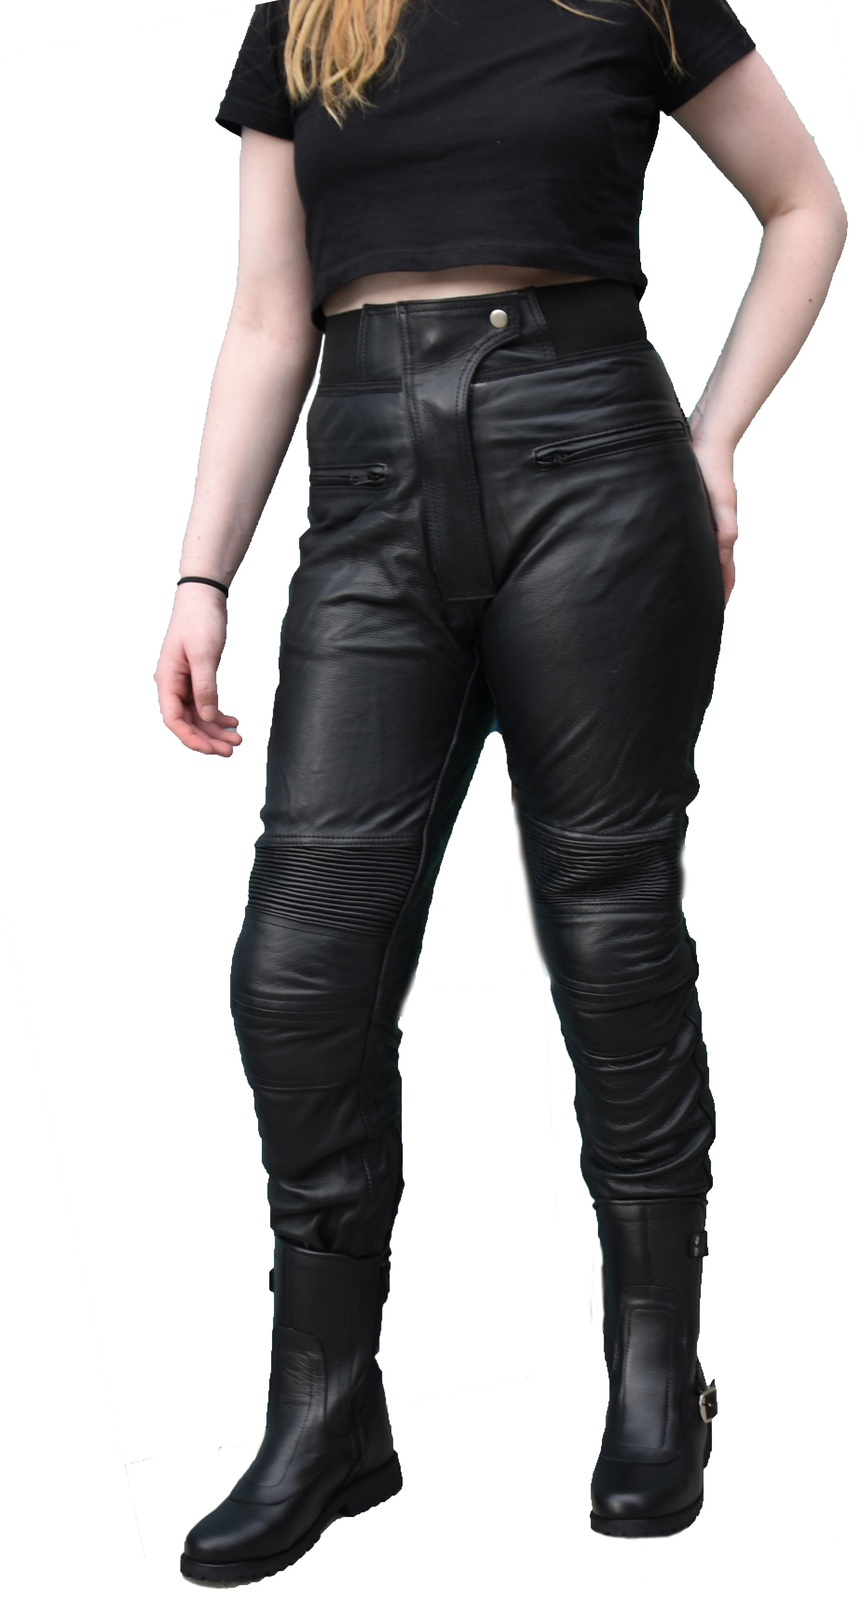 Rev It Airwave 2 Ladies Motorcycle Trousers  Textile Trousers   Ghostbikescom